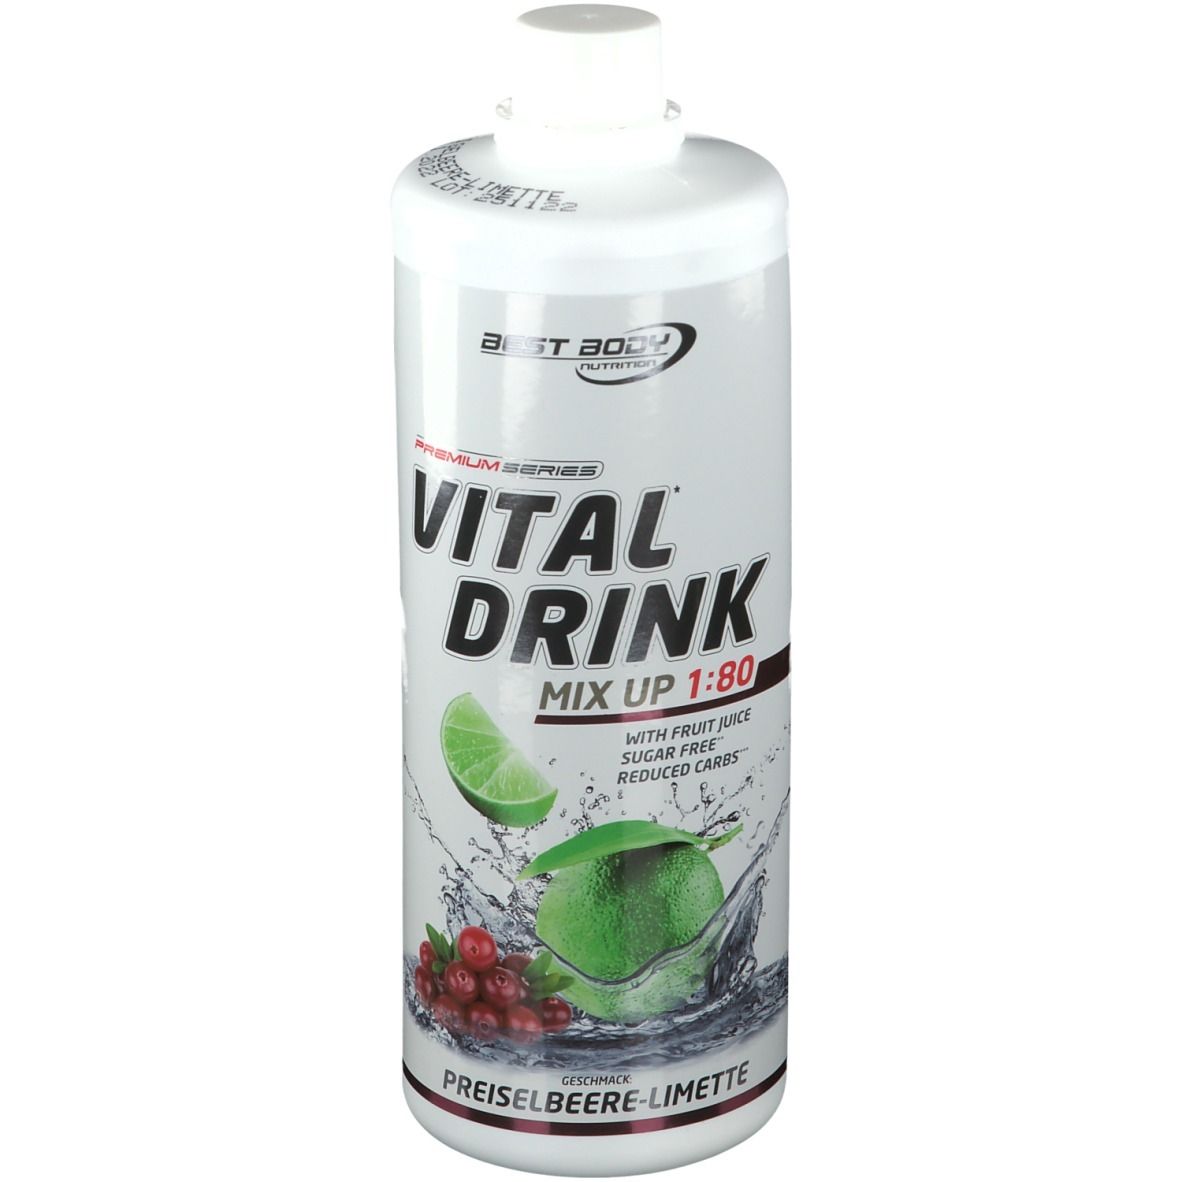 Best Body Nutrition Low Carb Vital Drink, Preiselbeere-Limette